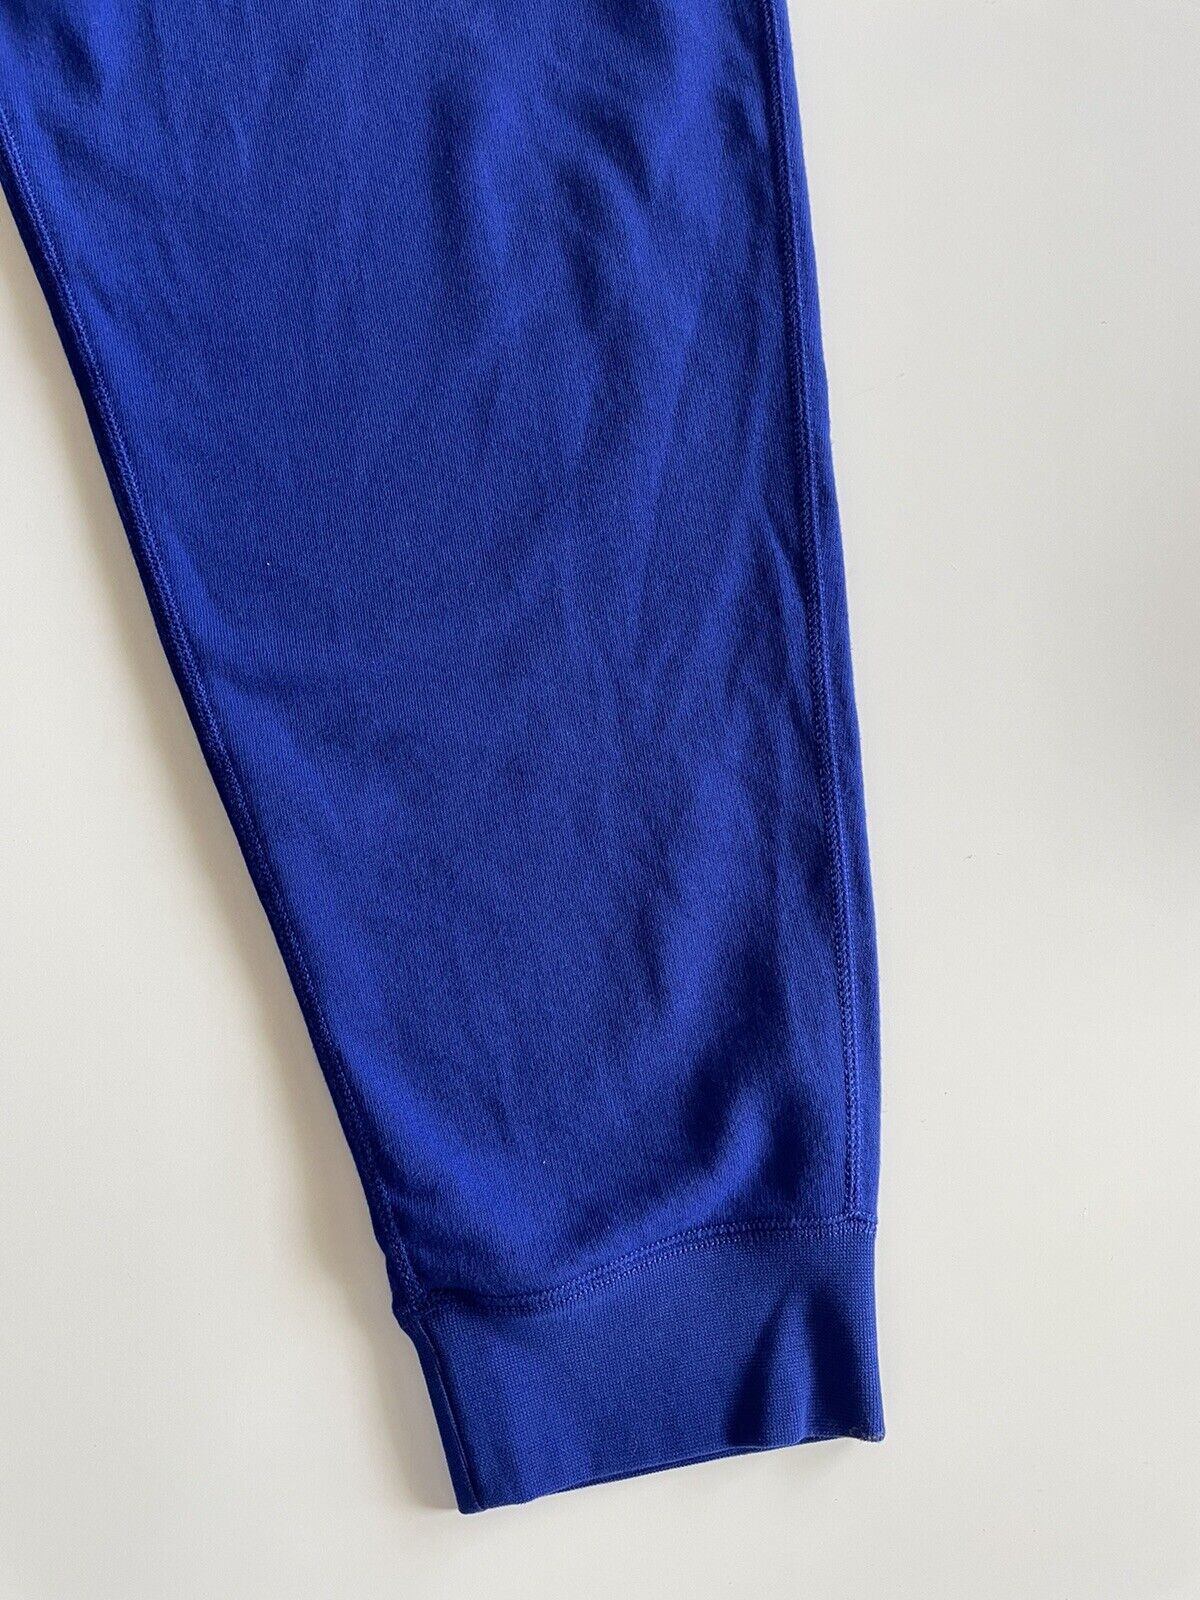 NWT $125 Polo Ralph Lauren Men's Polo Logo Blue Casual Pants 2XLT/2TG